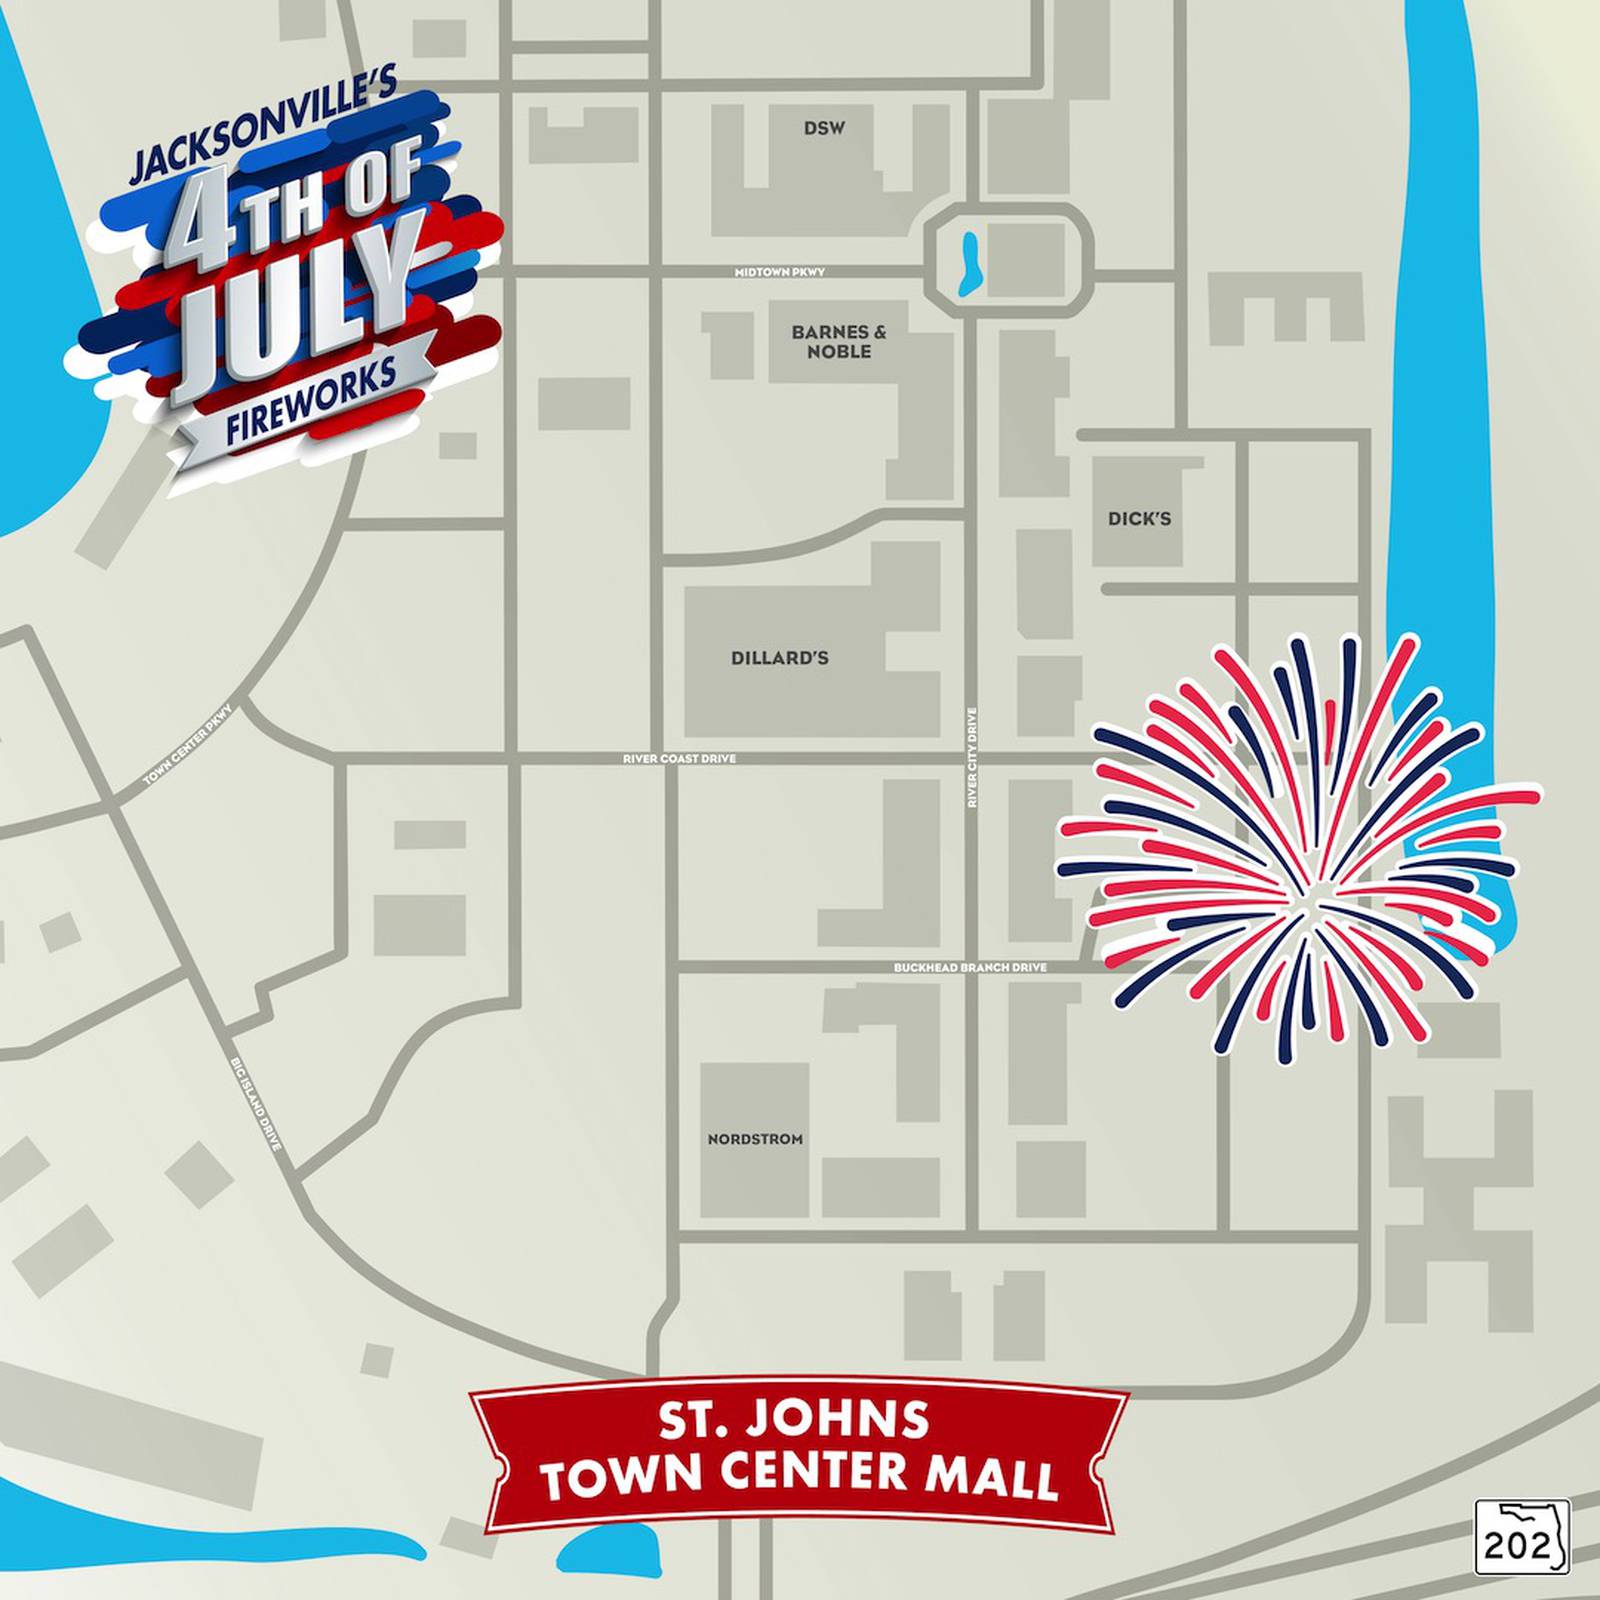 4th of July 2020 Fireworks Locations 104.5 WOKV